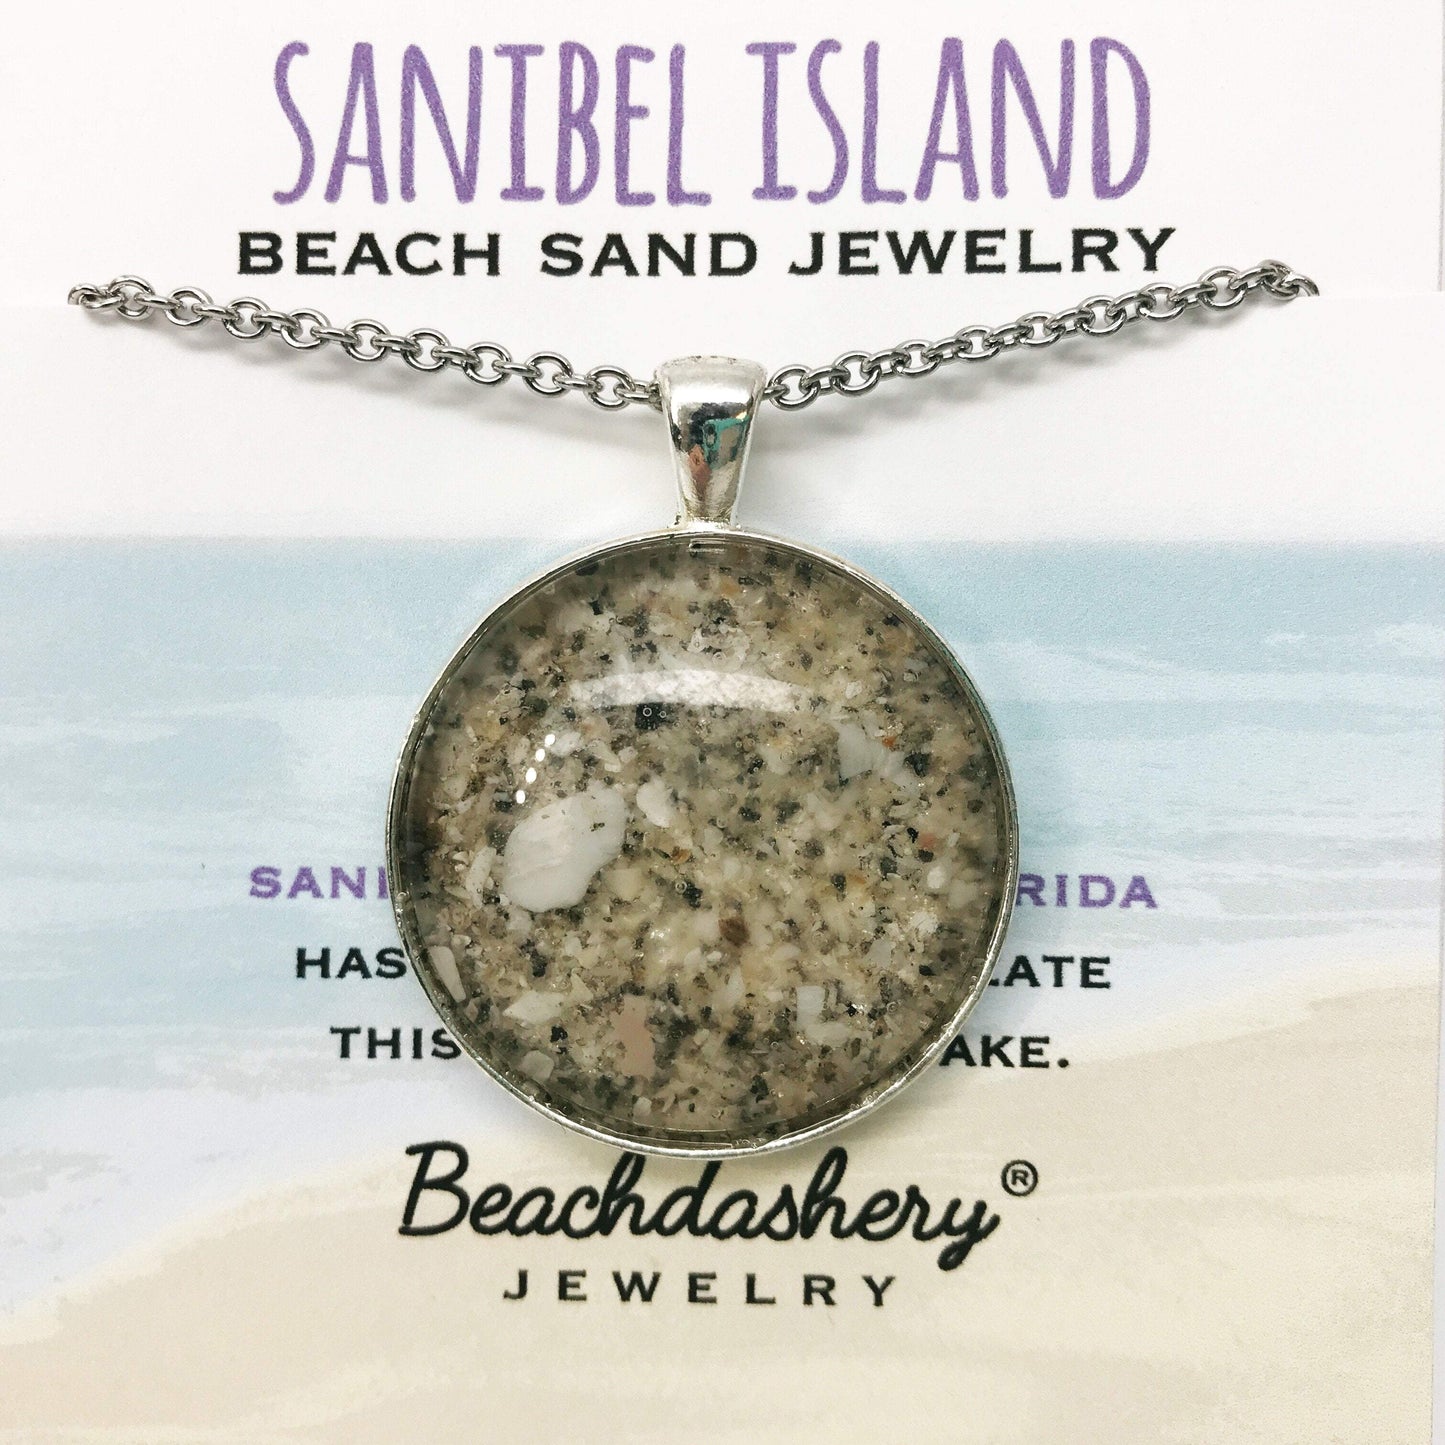 Sanibel Island Sand Jewelry Beachdashery Jewelry